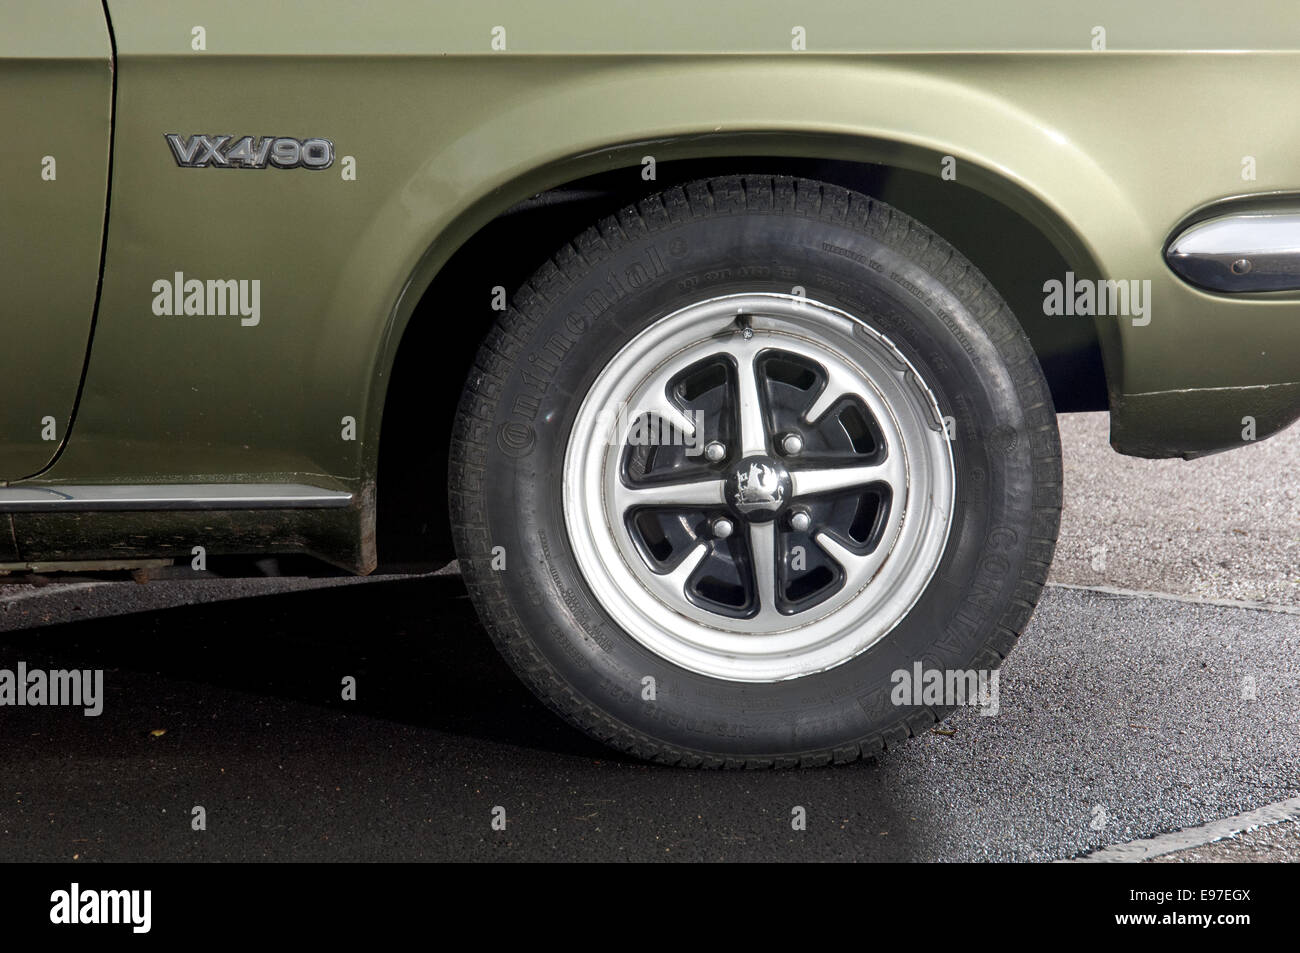 1972 Vauxhall VX4/90 classic British performance saloon car Rostyle alloy wheel Stock Photo